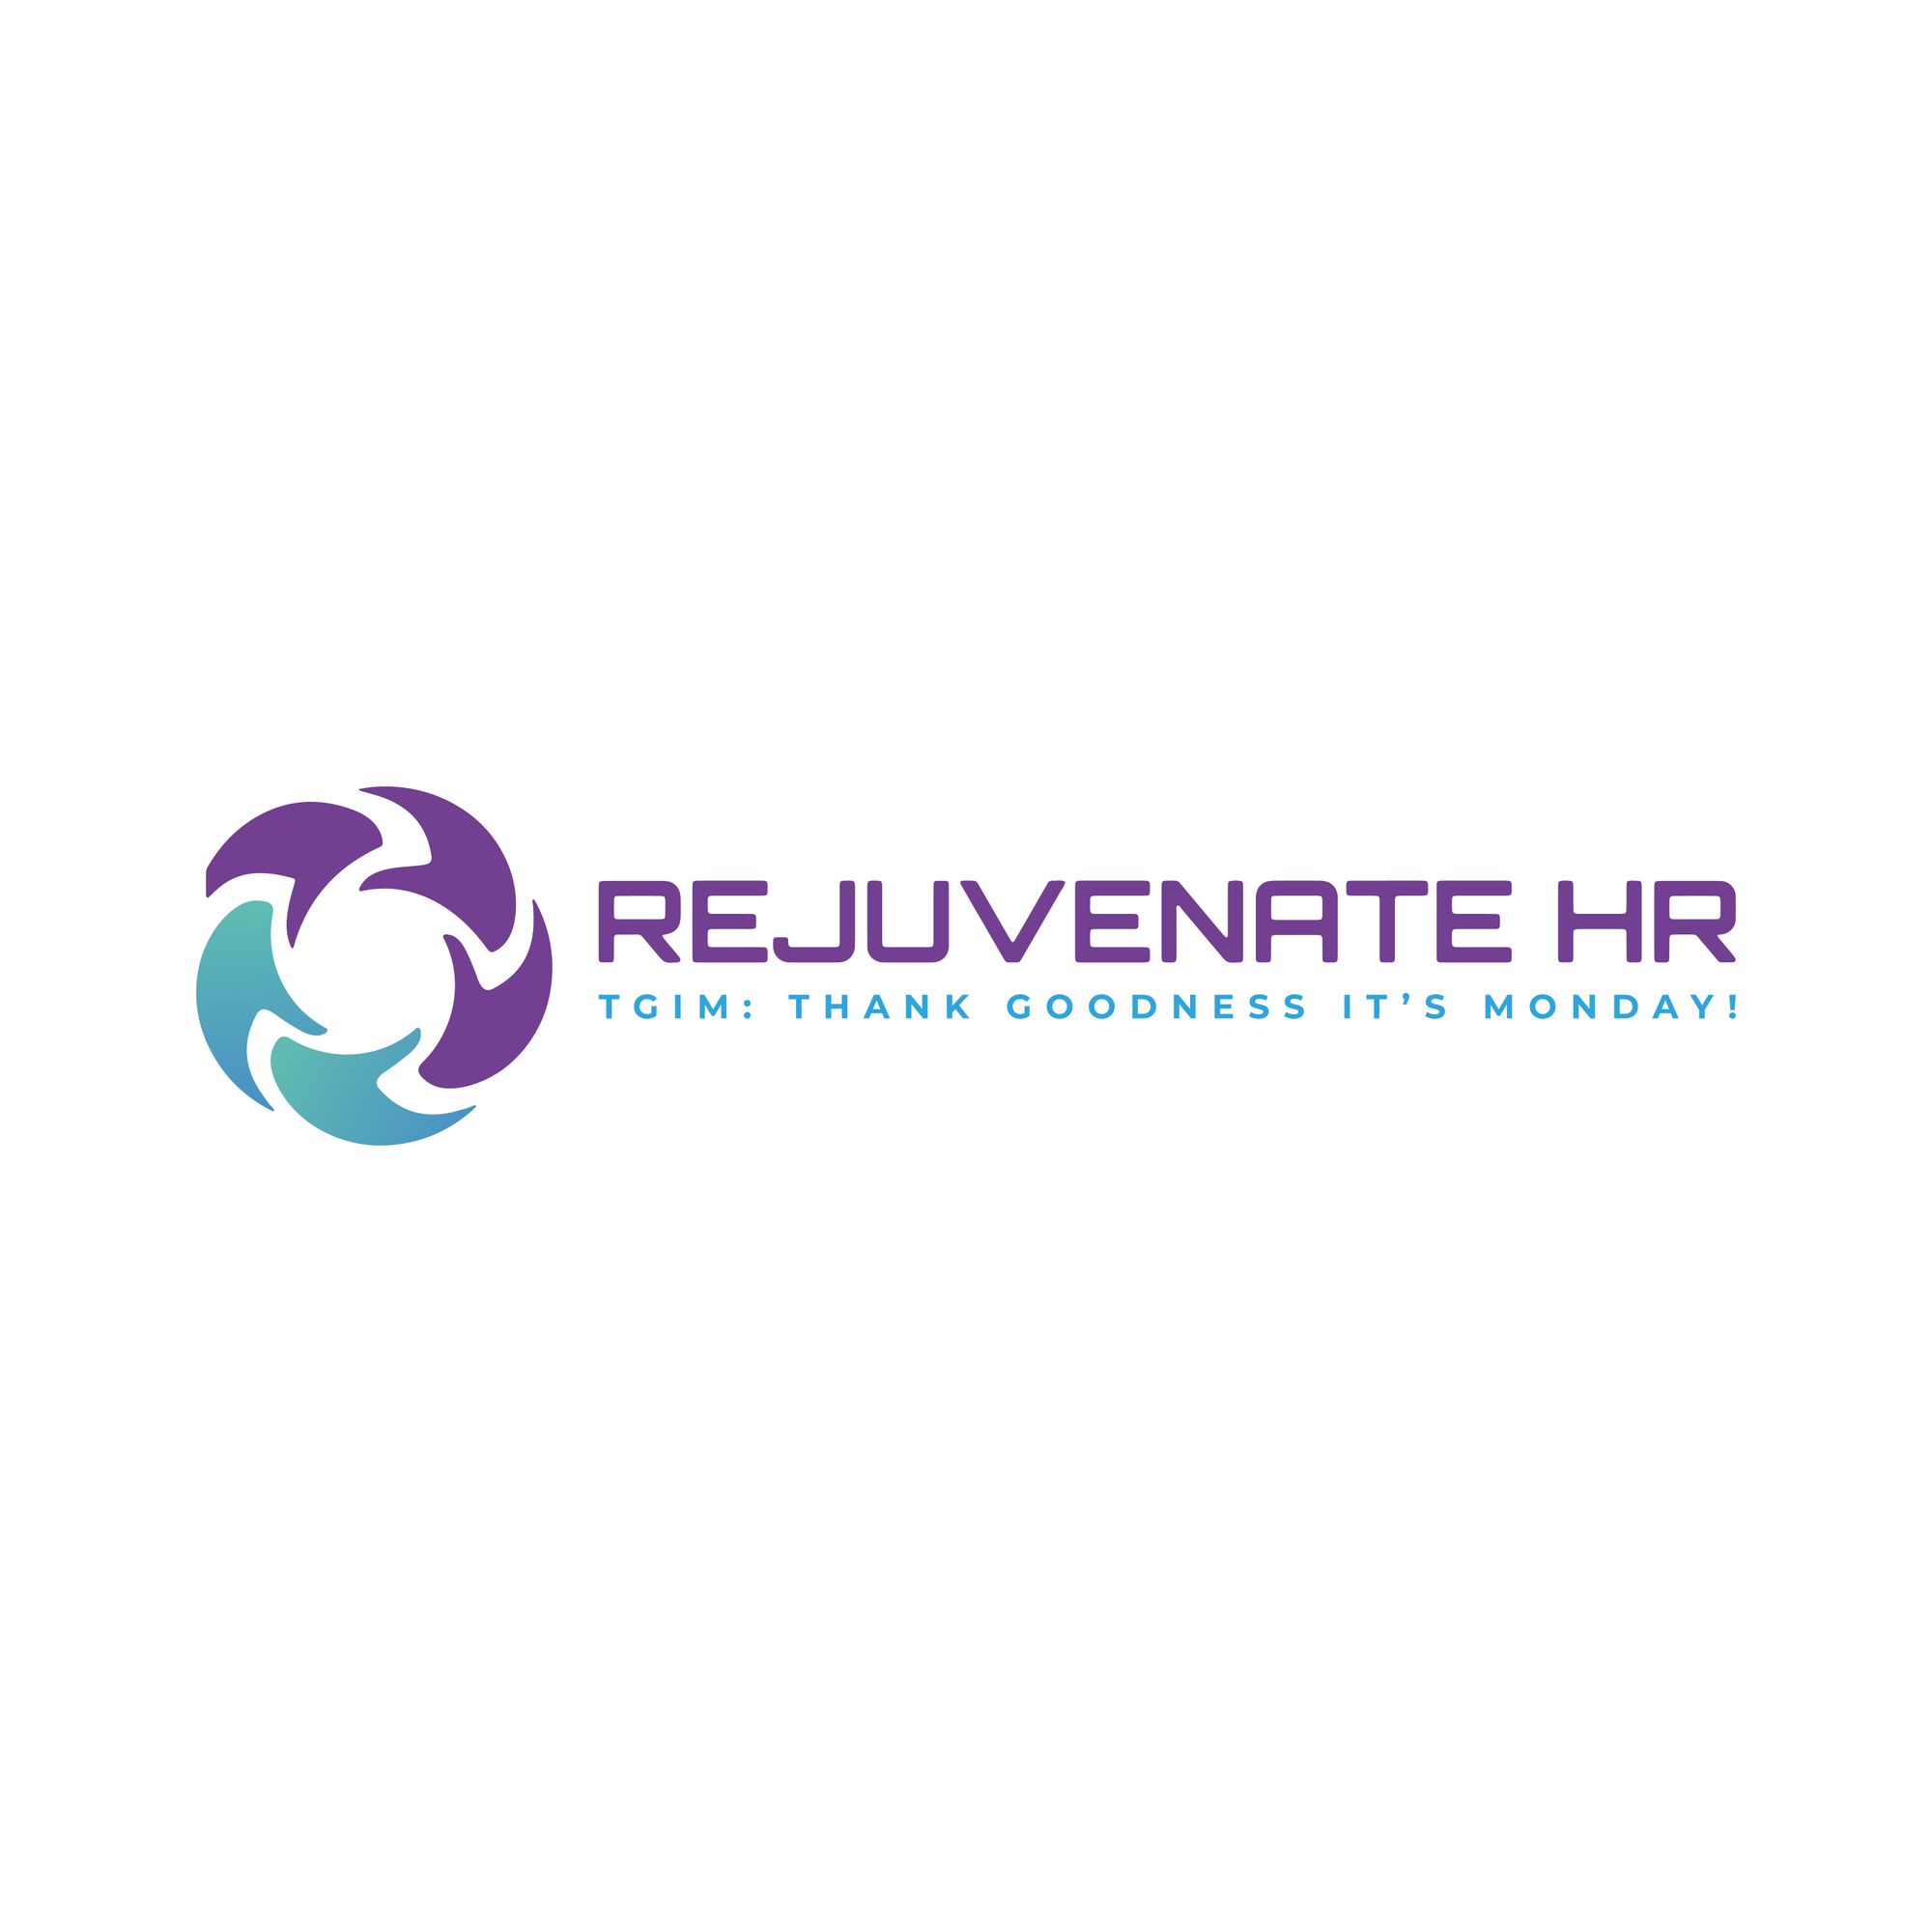 A Positive Employee Experience - Rejuvenate HR